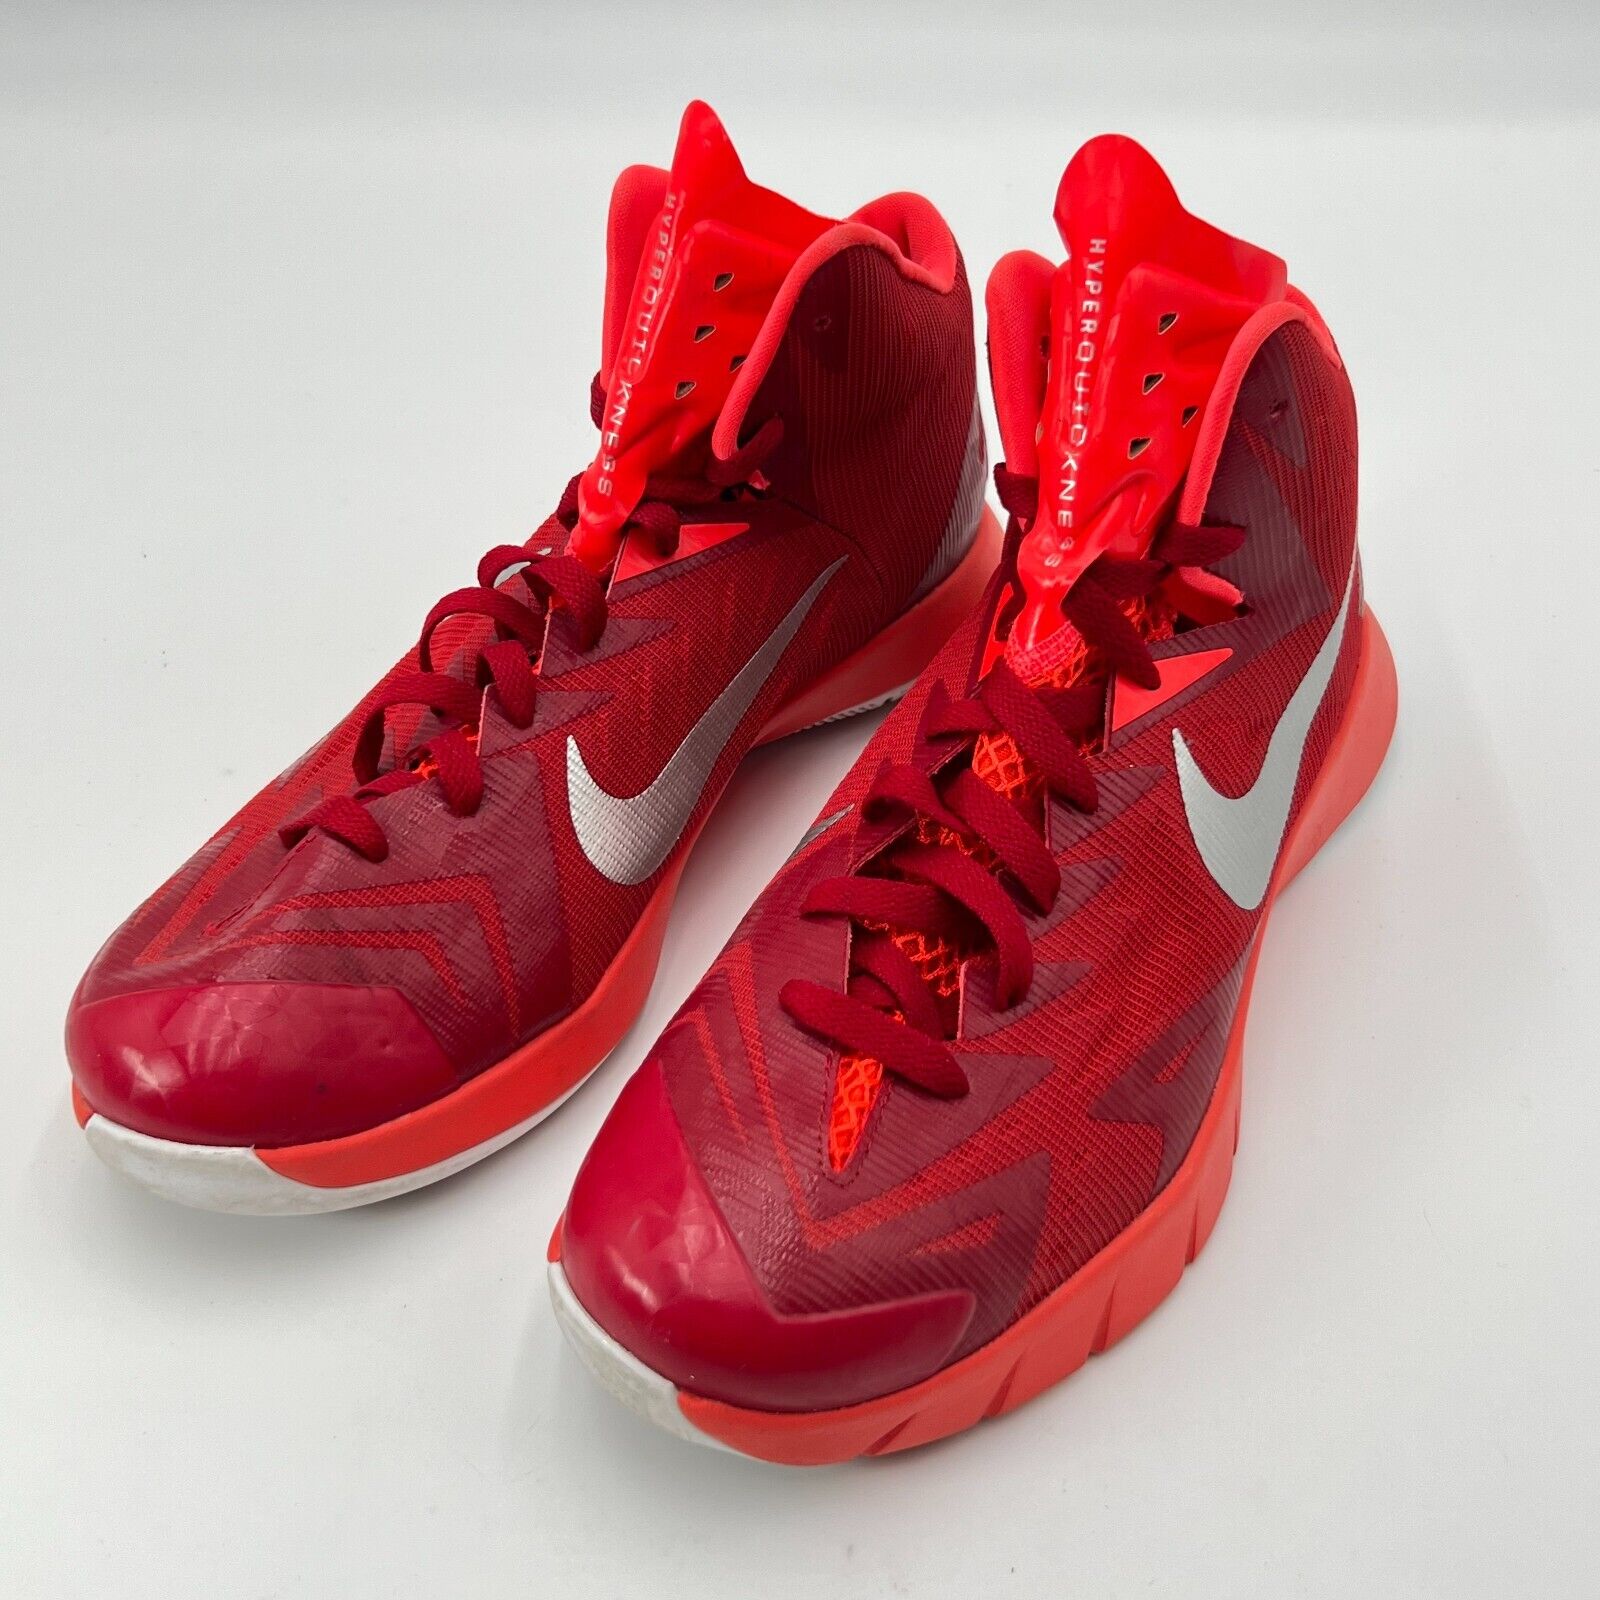 Nike Lunarlon Hyperquickness Basketball Shoes Red Mens Size 9 US 652775-606